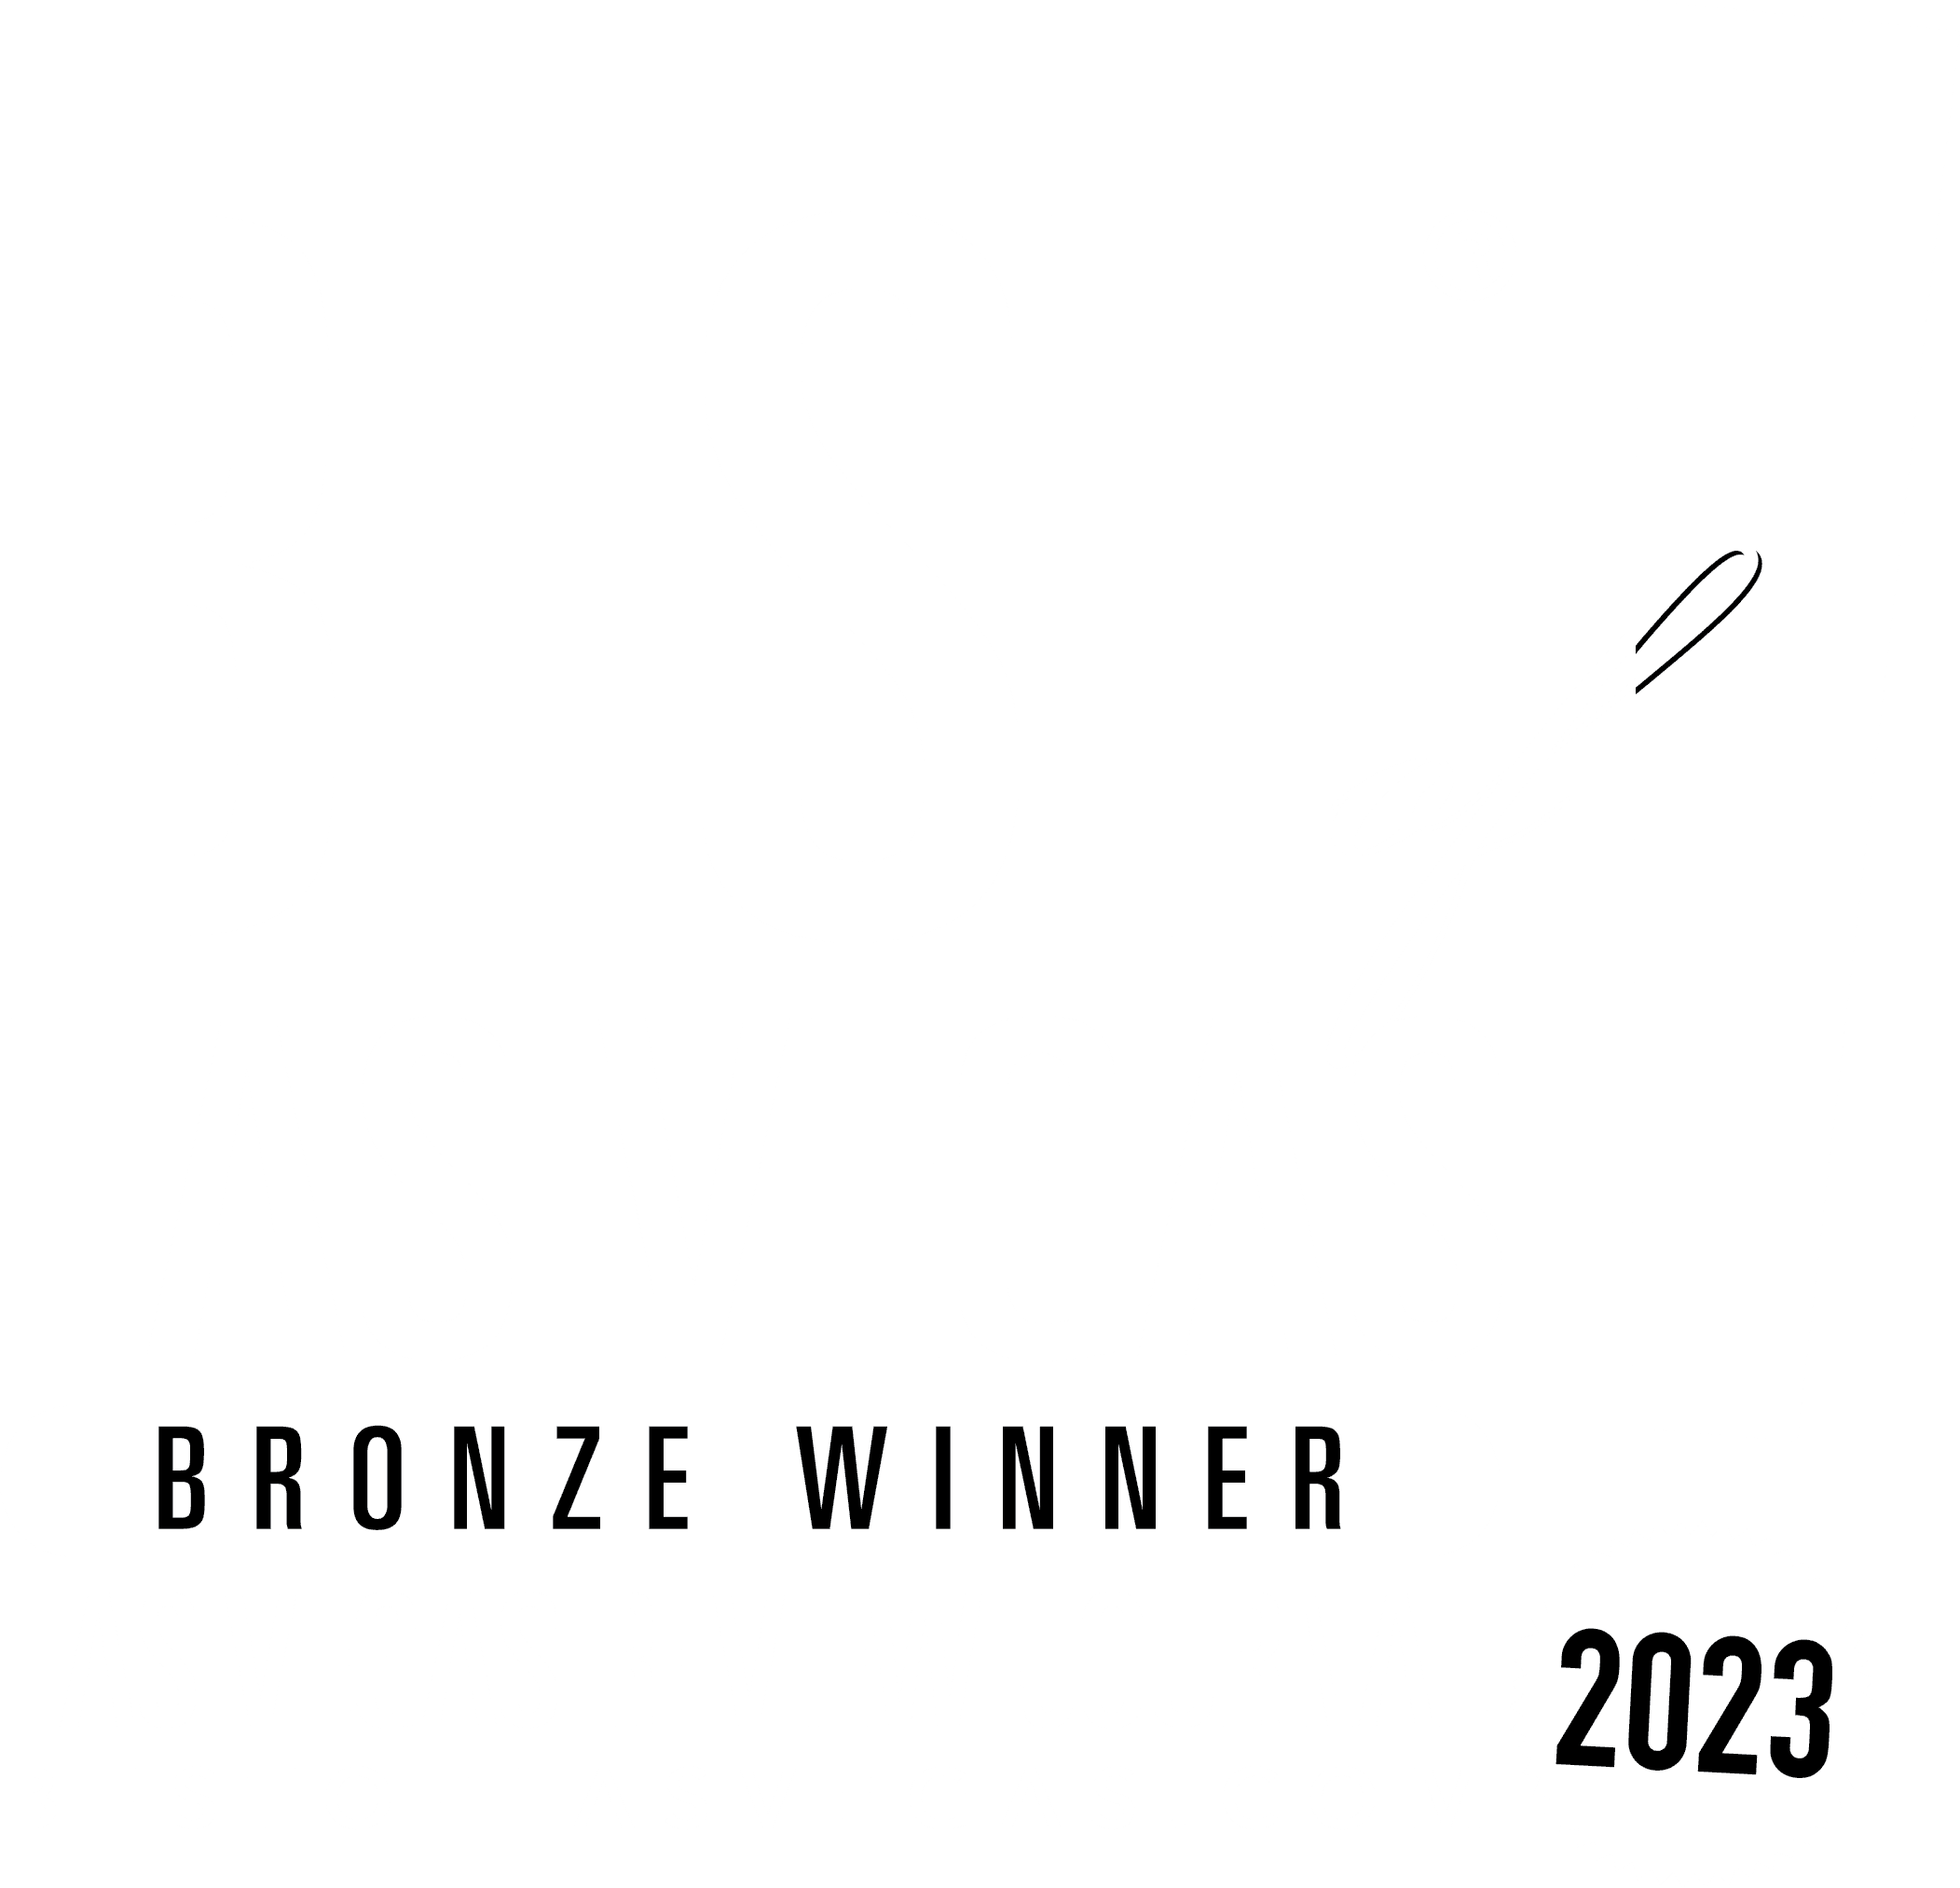 Best of Las Vegas Bronze Winner 2023